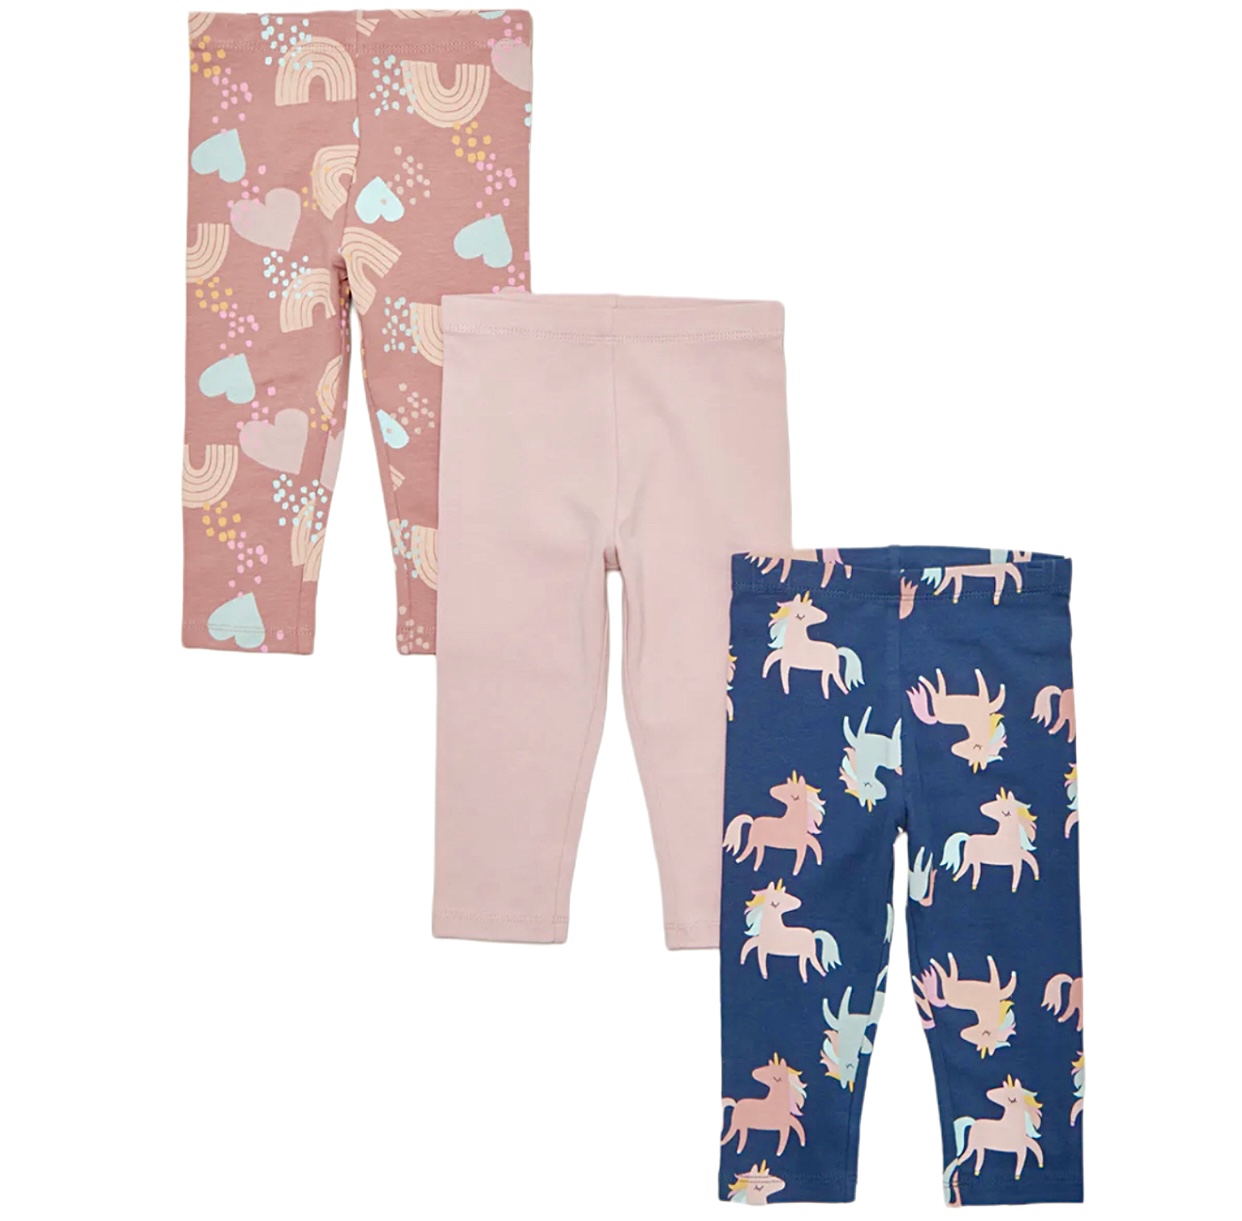 Unicorn Printed Leggings/Pants for Girls/Baby Girls